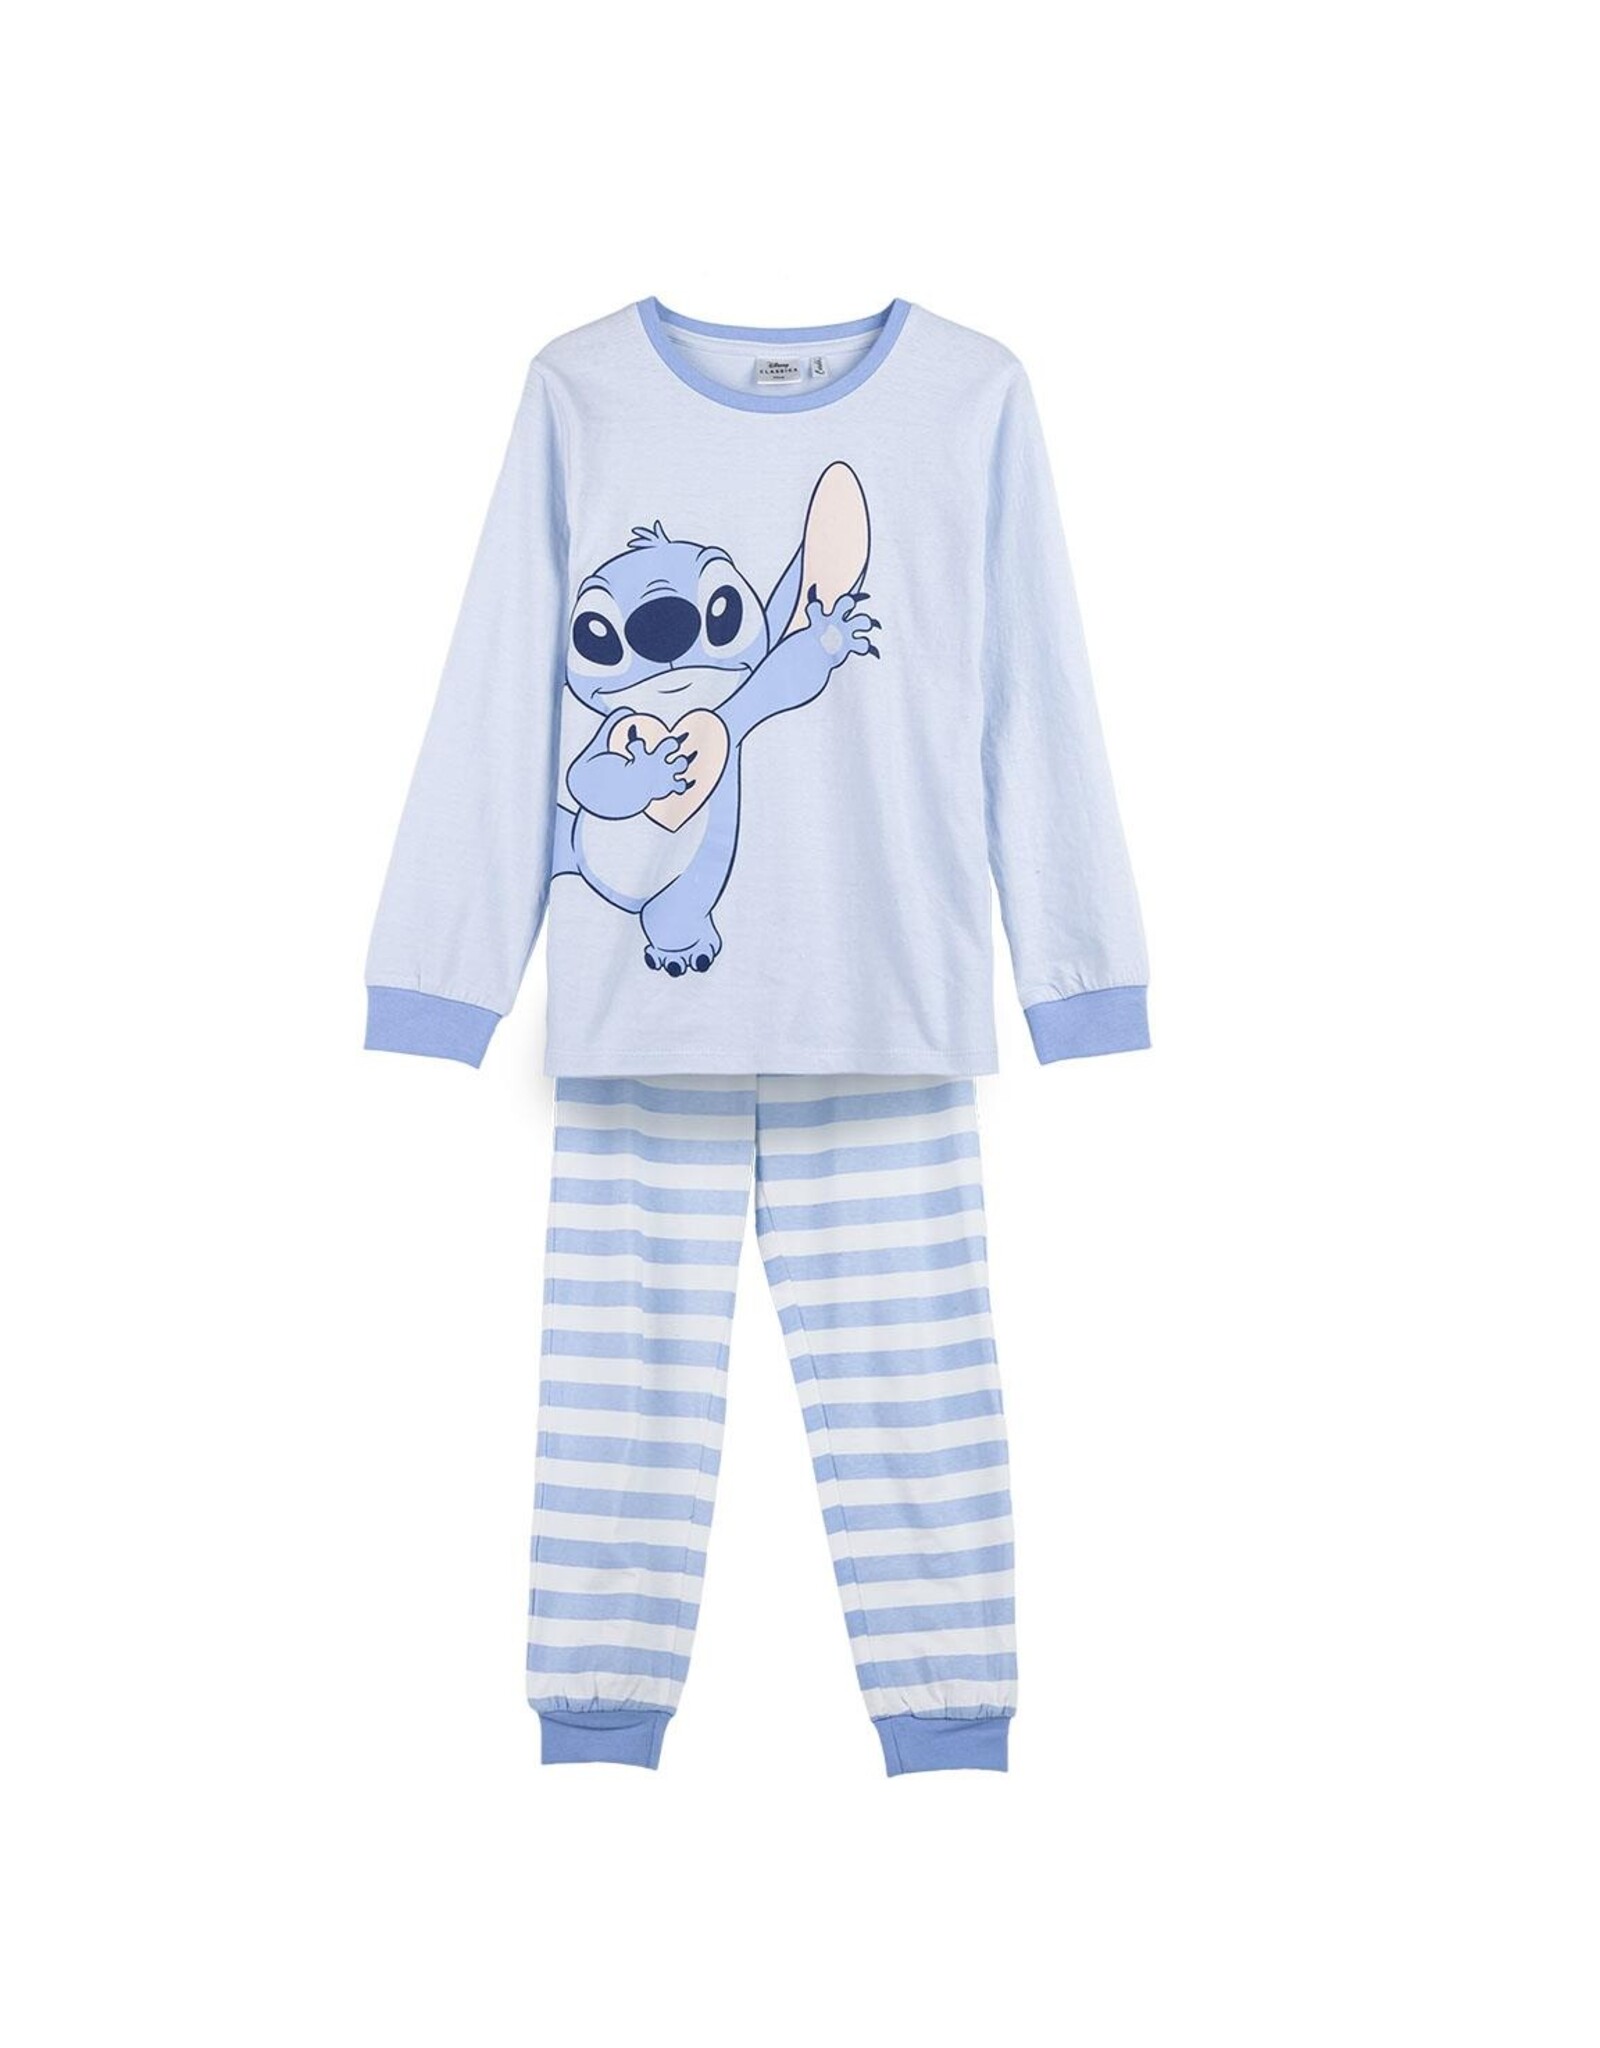 Disney Stitch Pyjama - Big Hearth - Merchandise4All